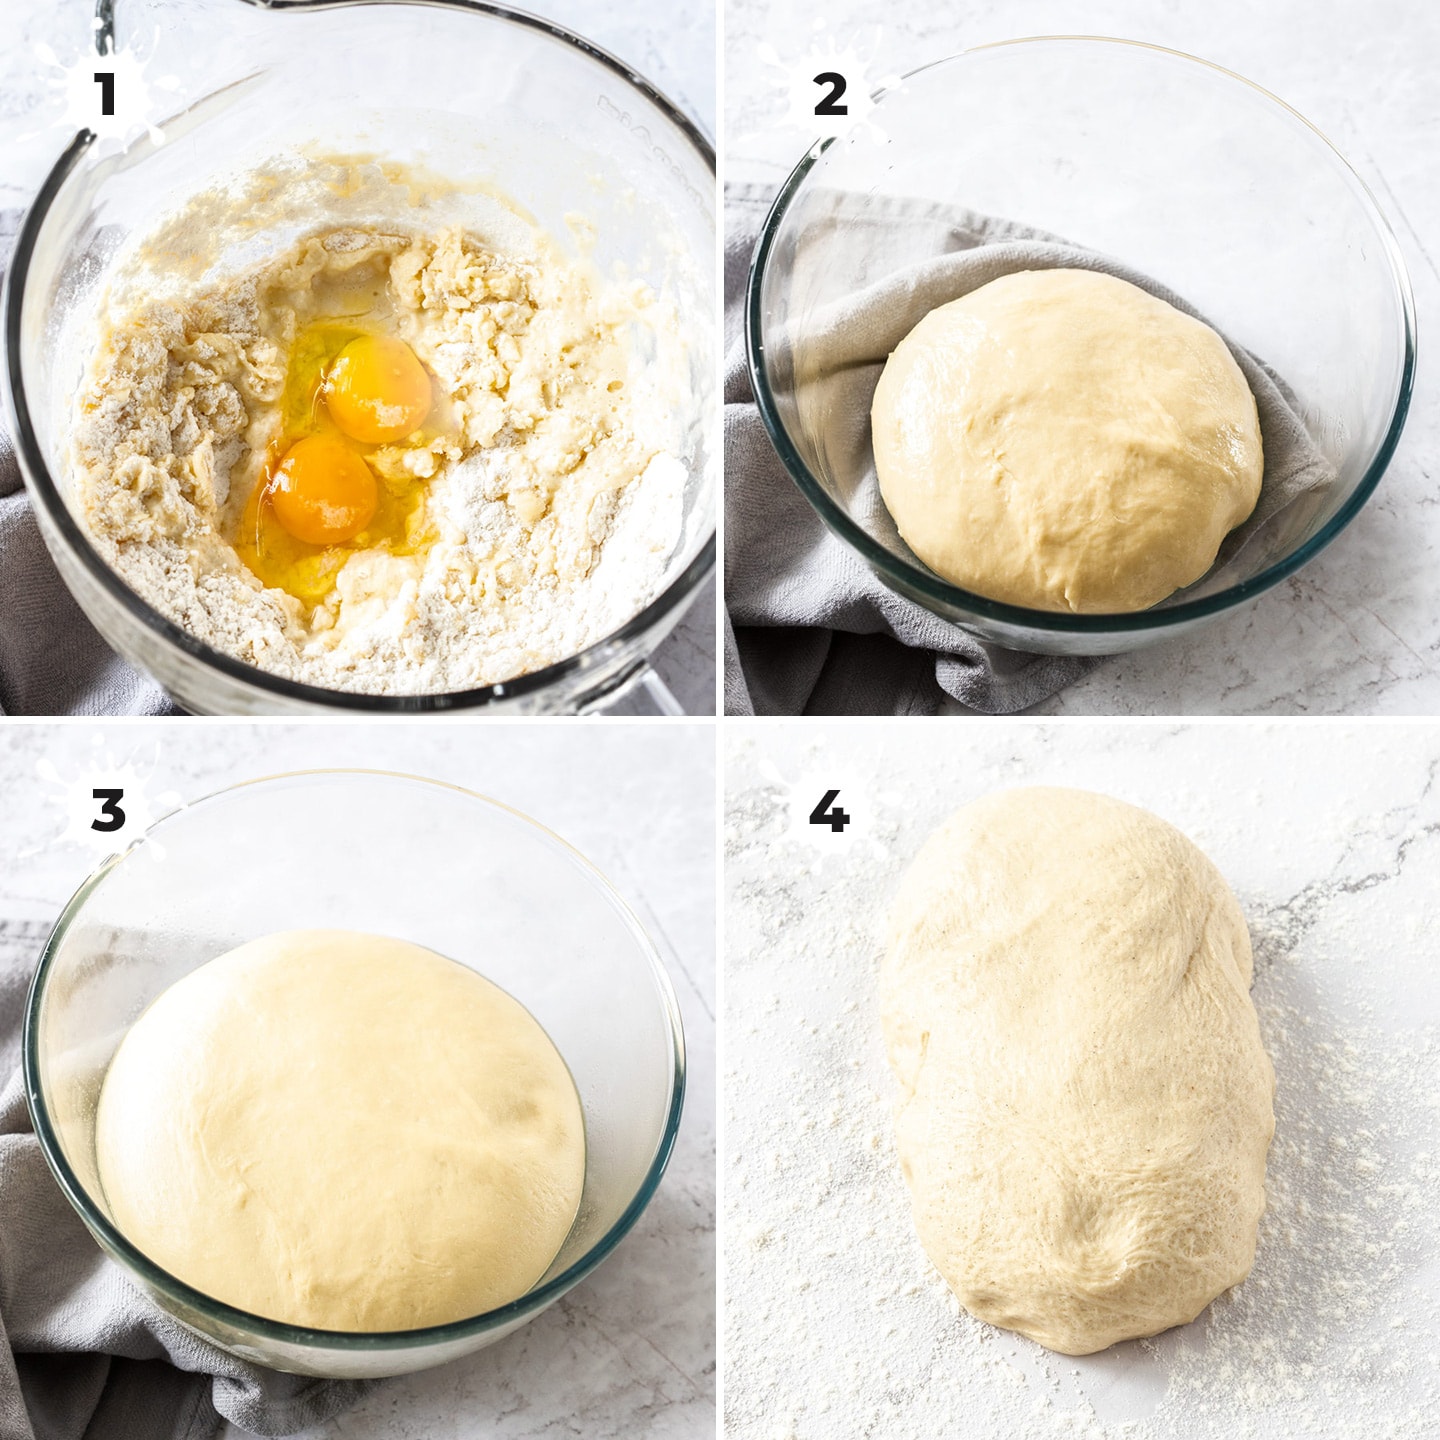 Images showing how to make cinnamon bun dough.